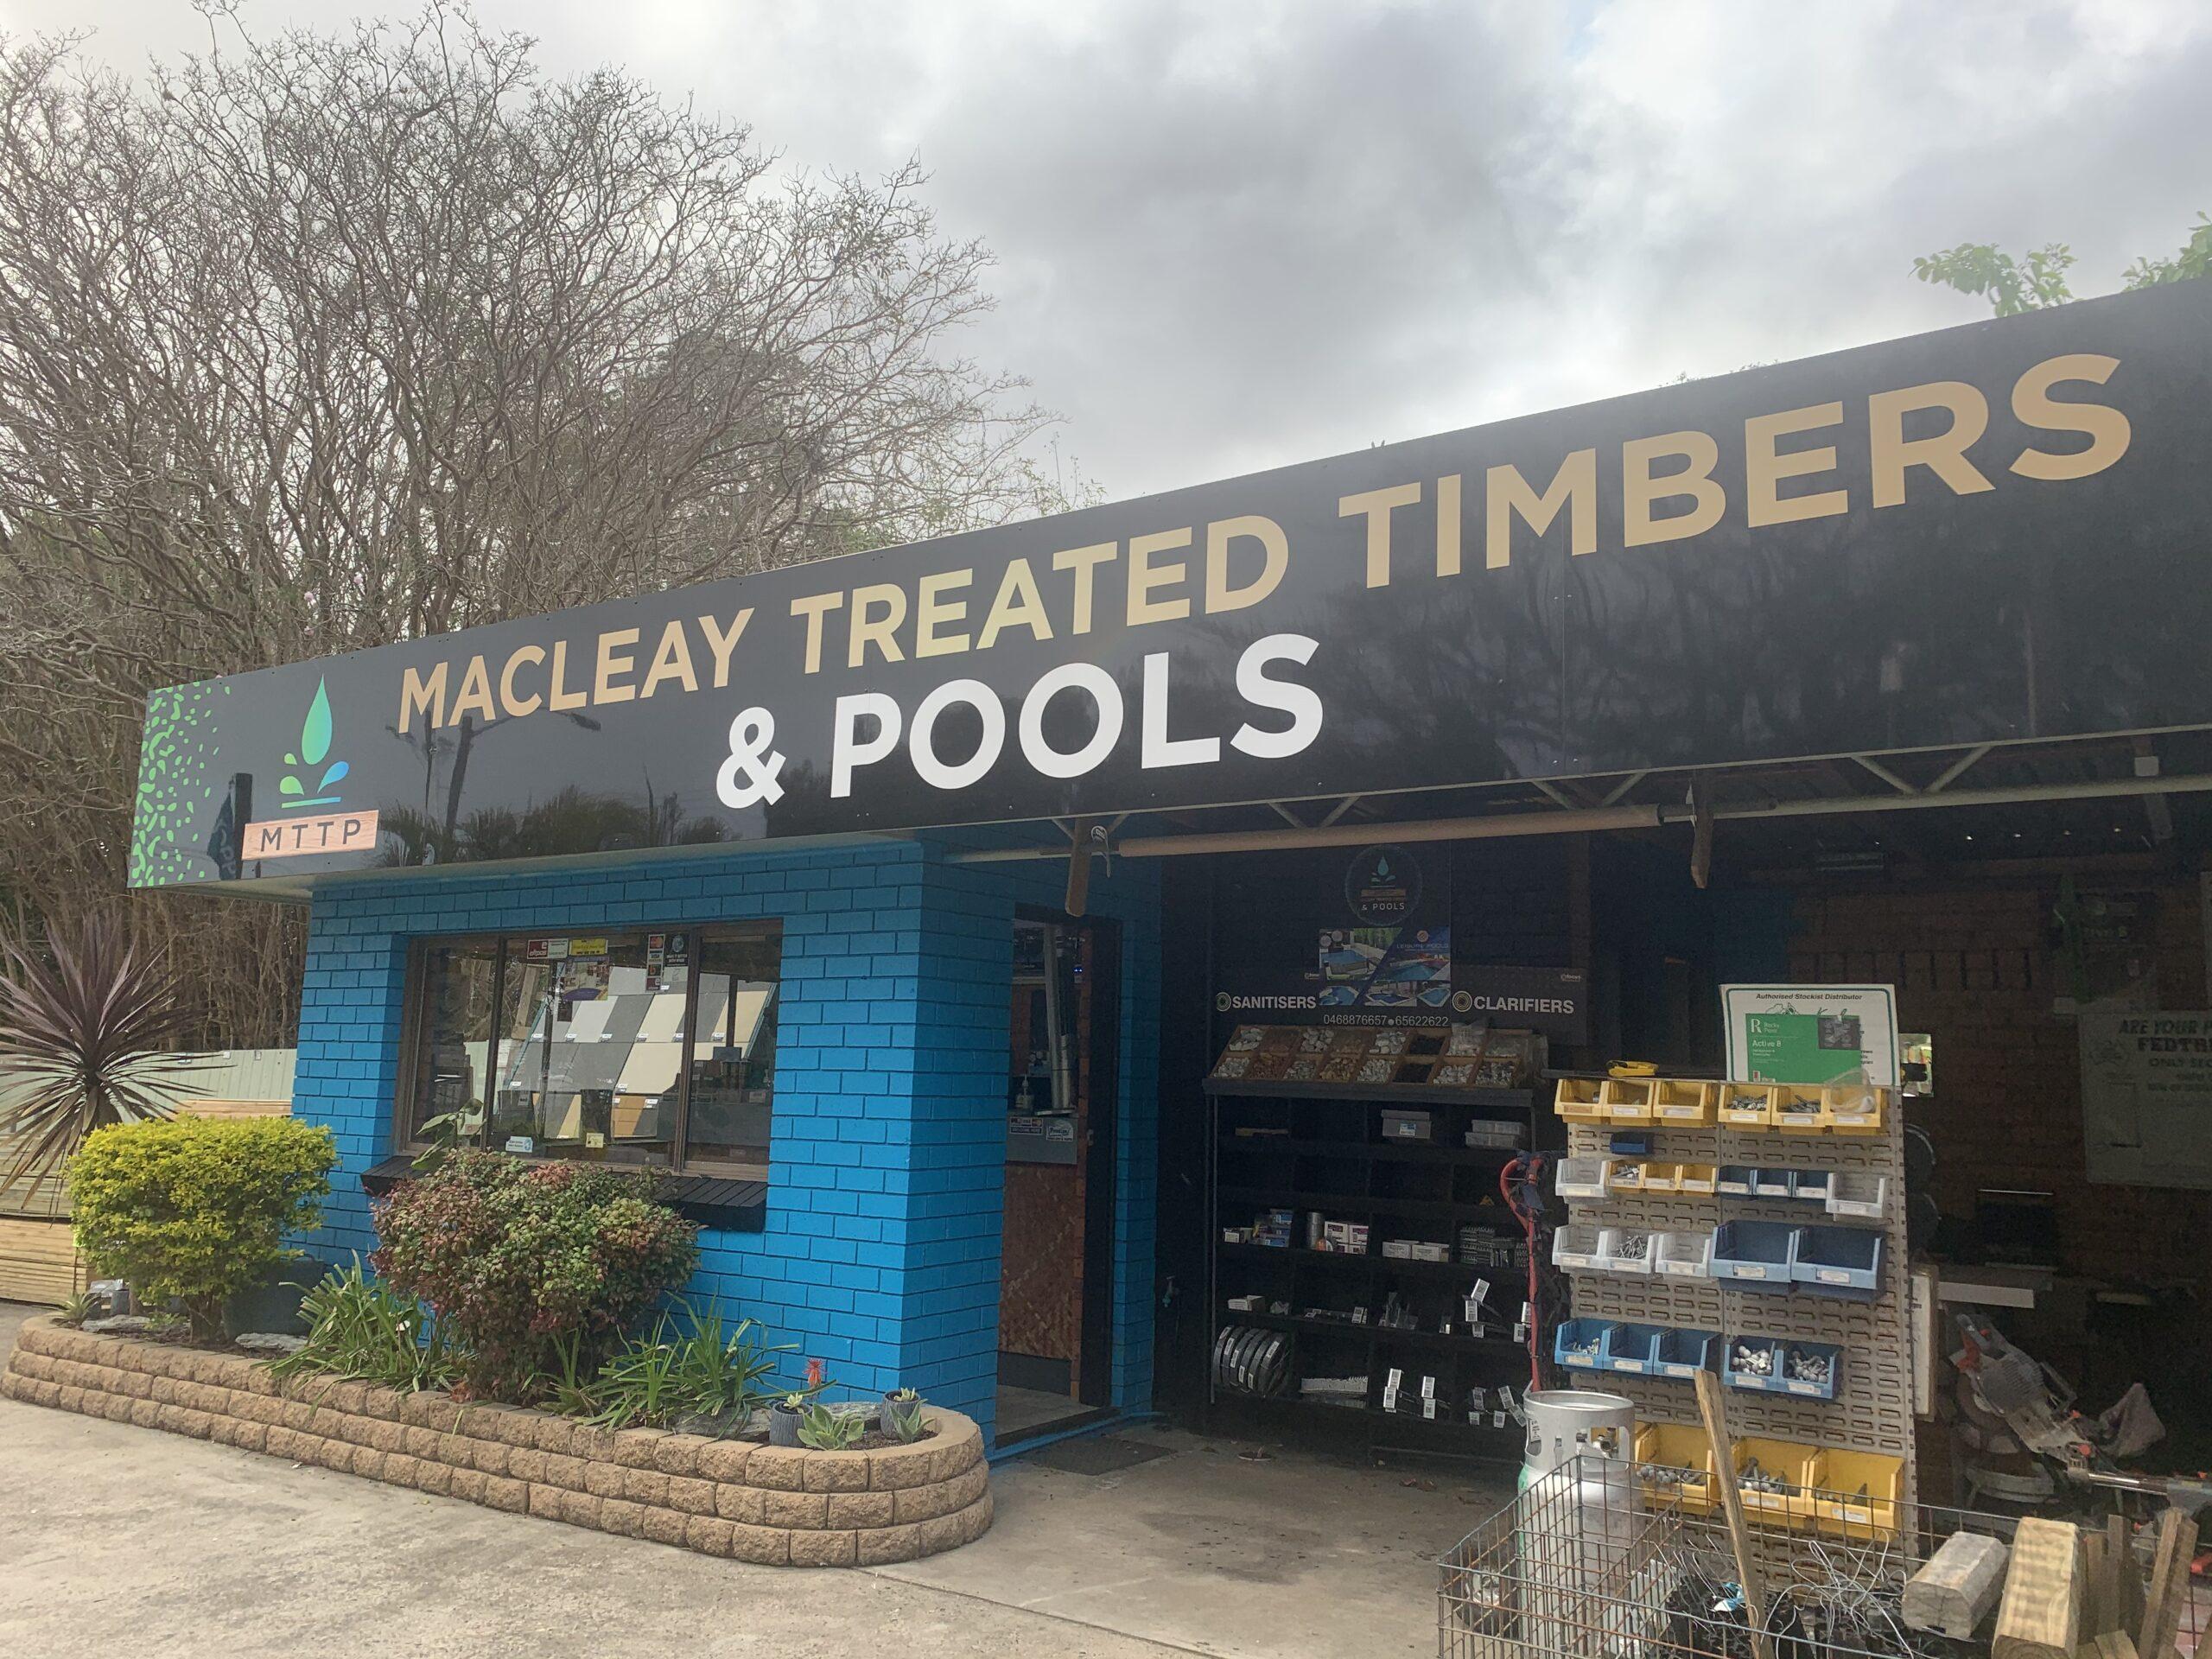 Macleay Treated Timbers & Pools